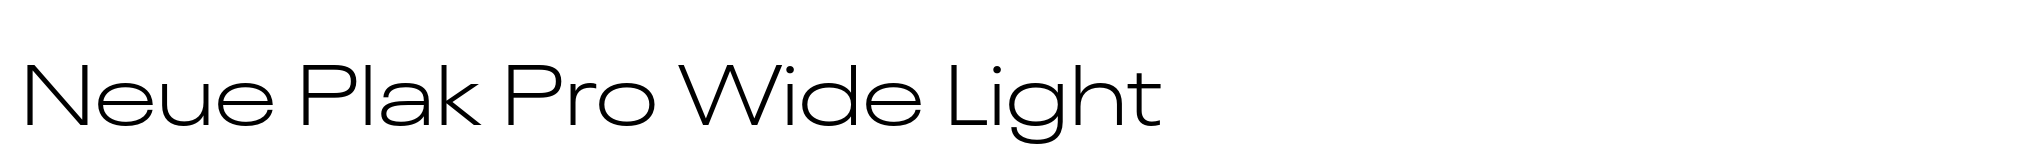 Neue Plak Pro Wide Light image